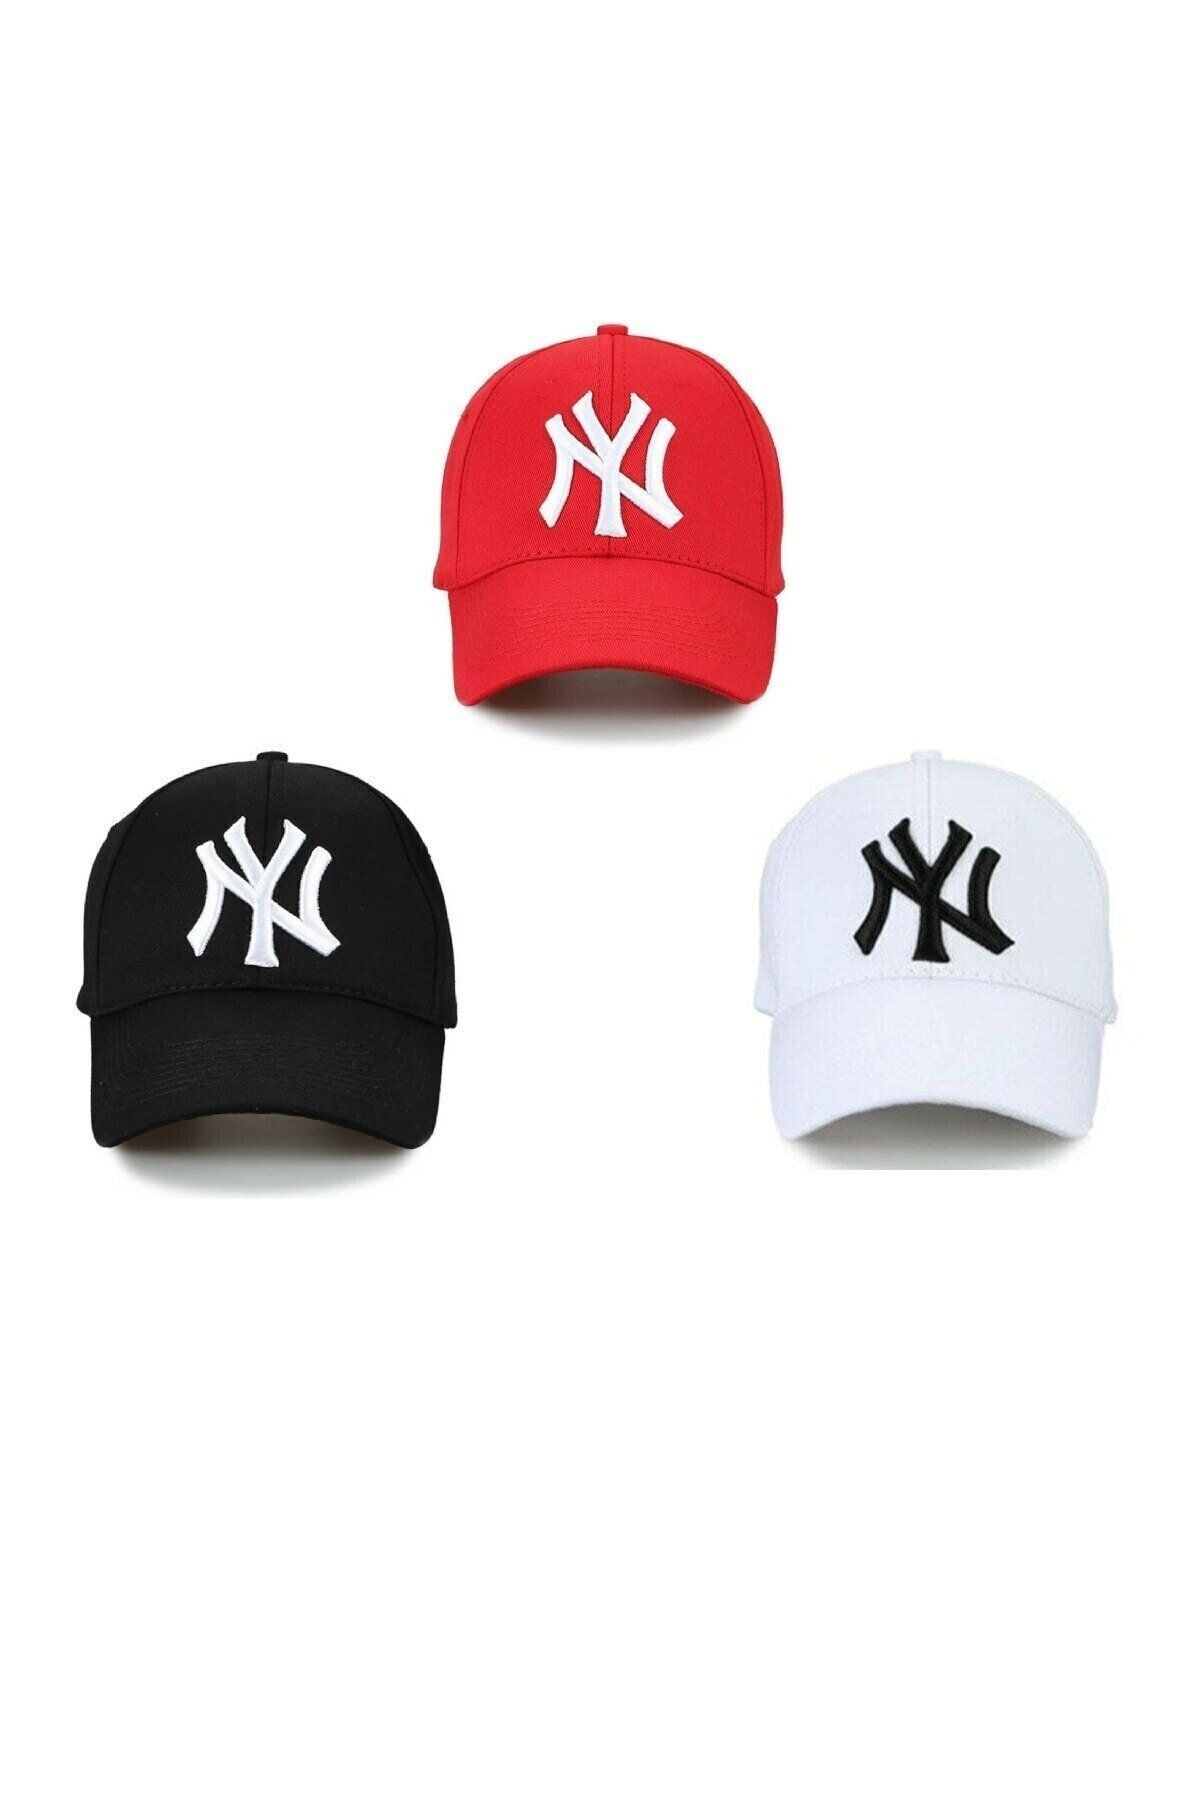 QUATEX Unisex Ny 3'lü Kırmızı Set Şapka